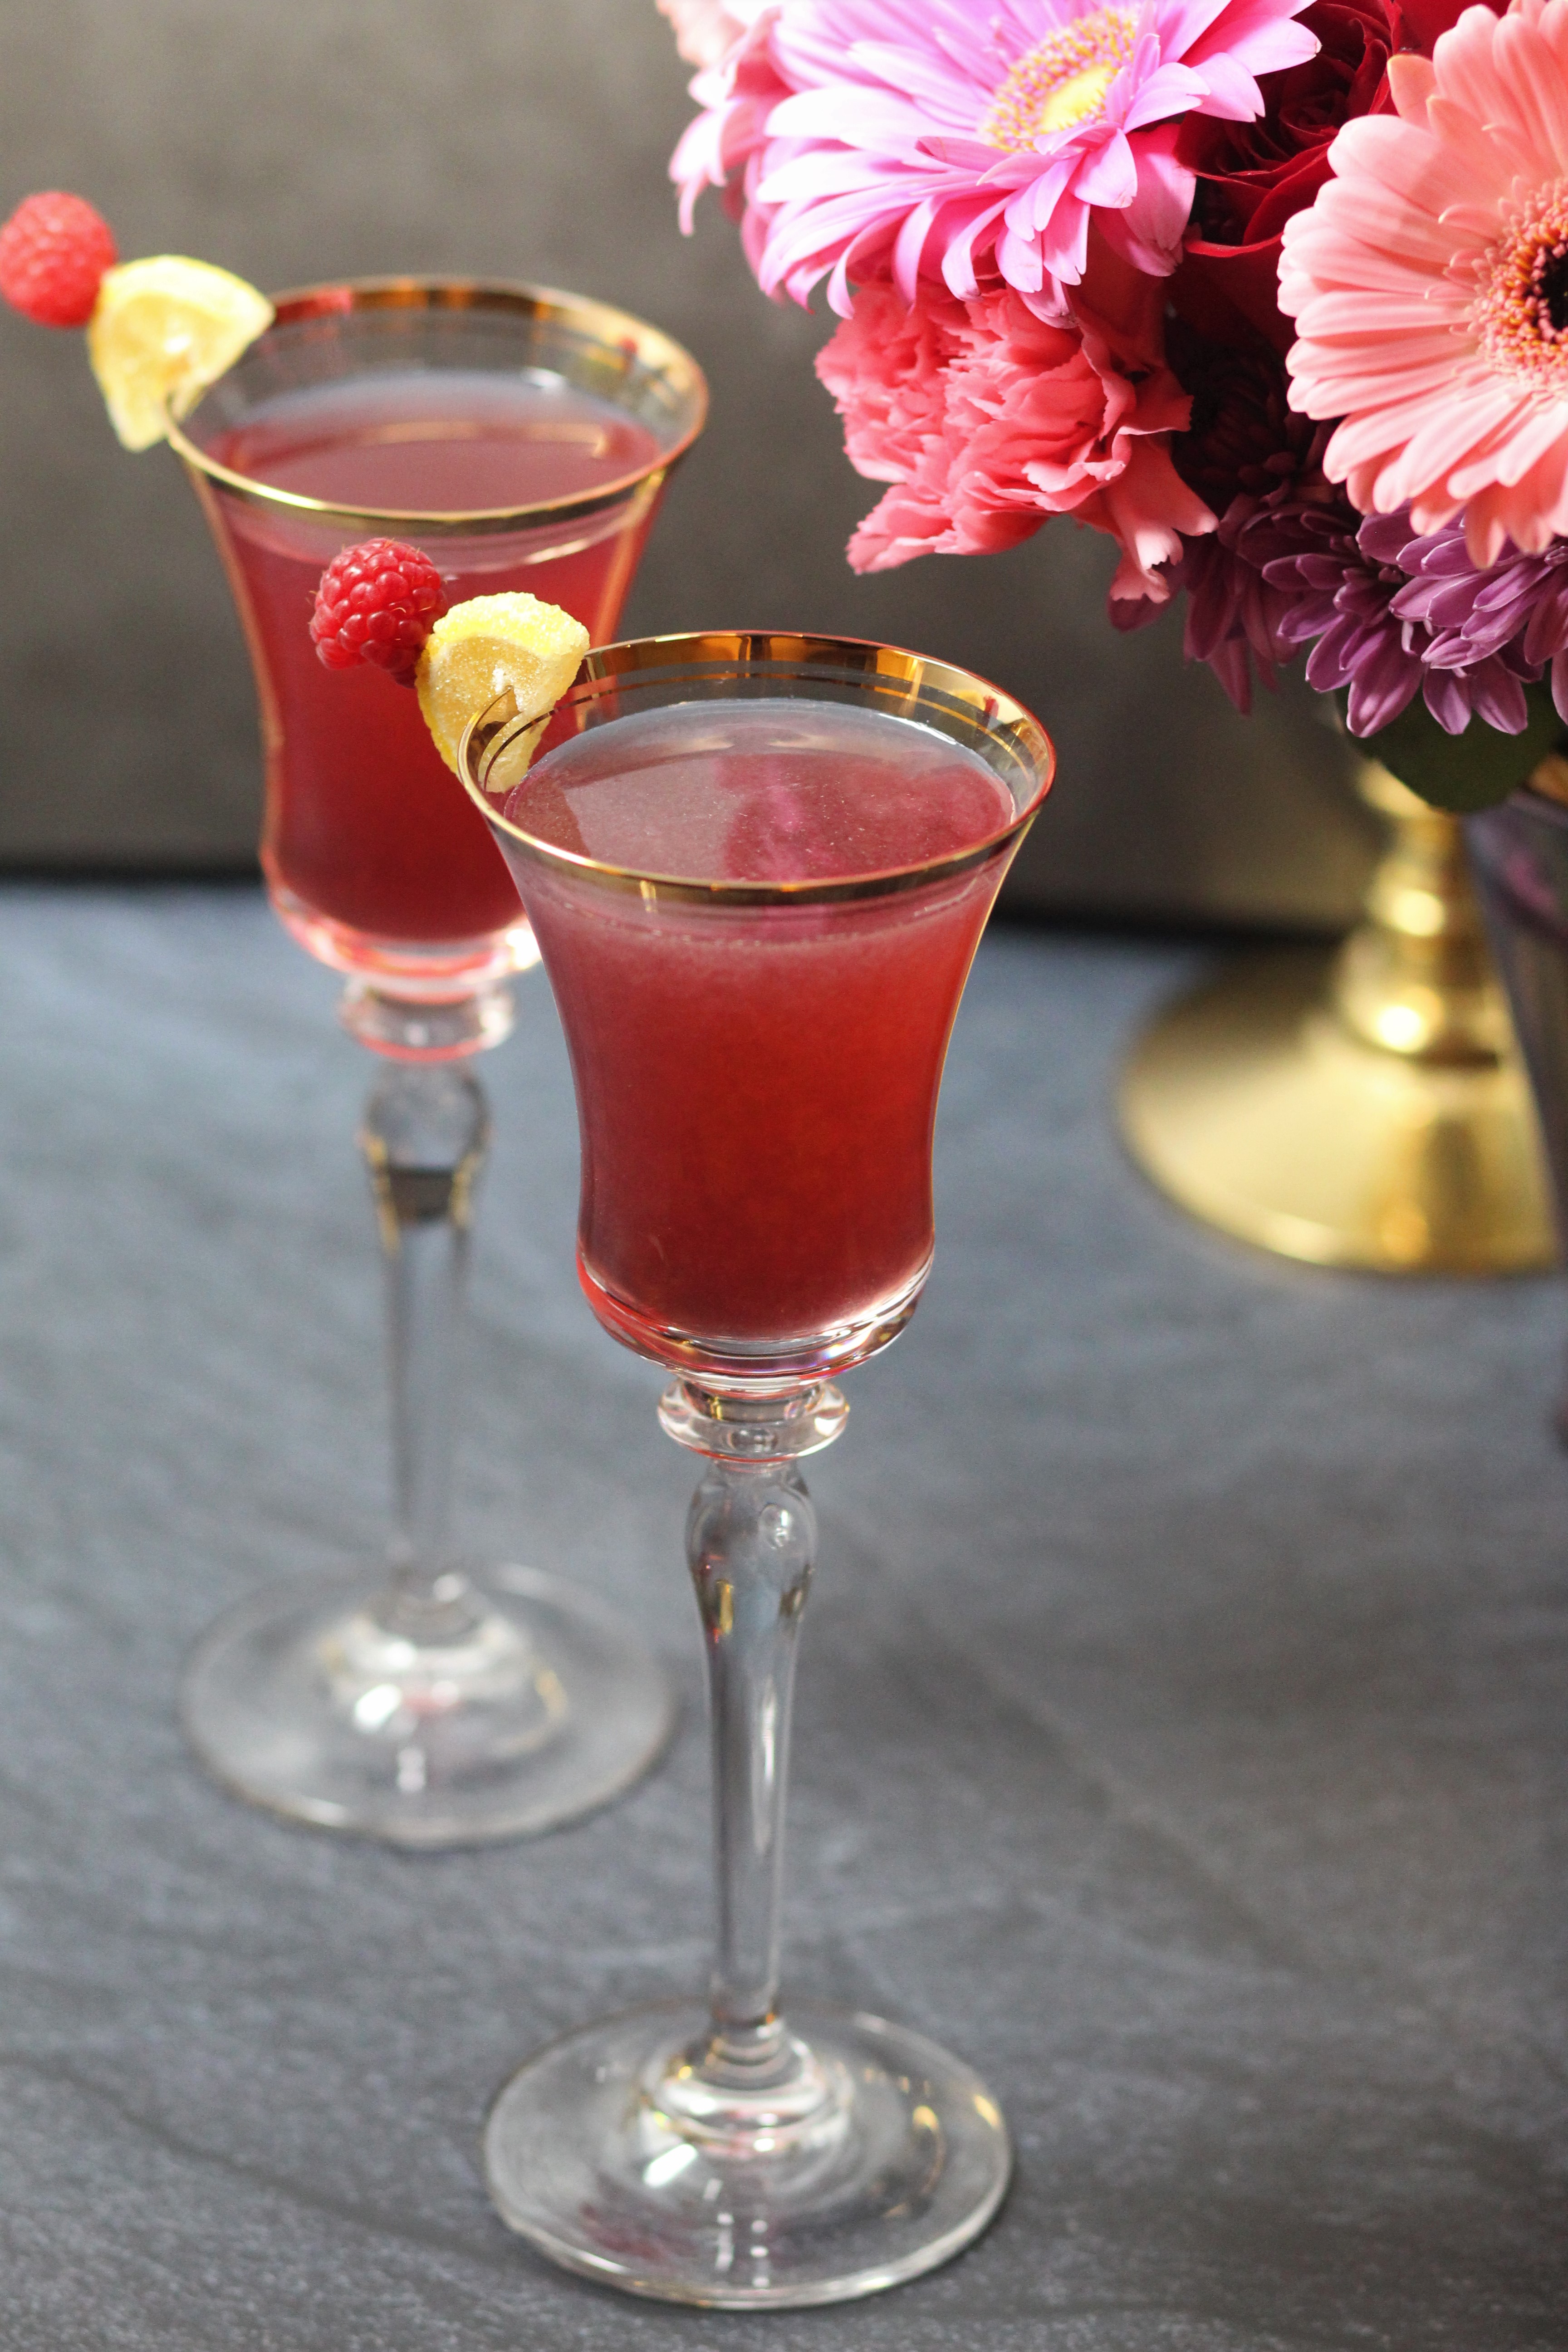 The Best EVER Raspberry Lemondrop Martini